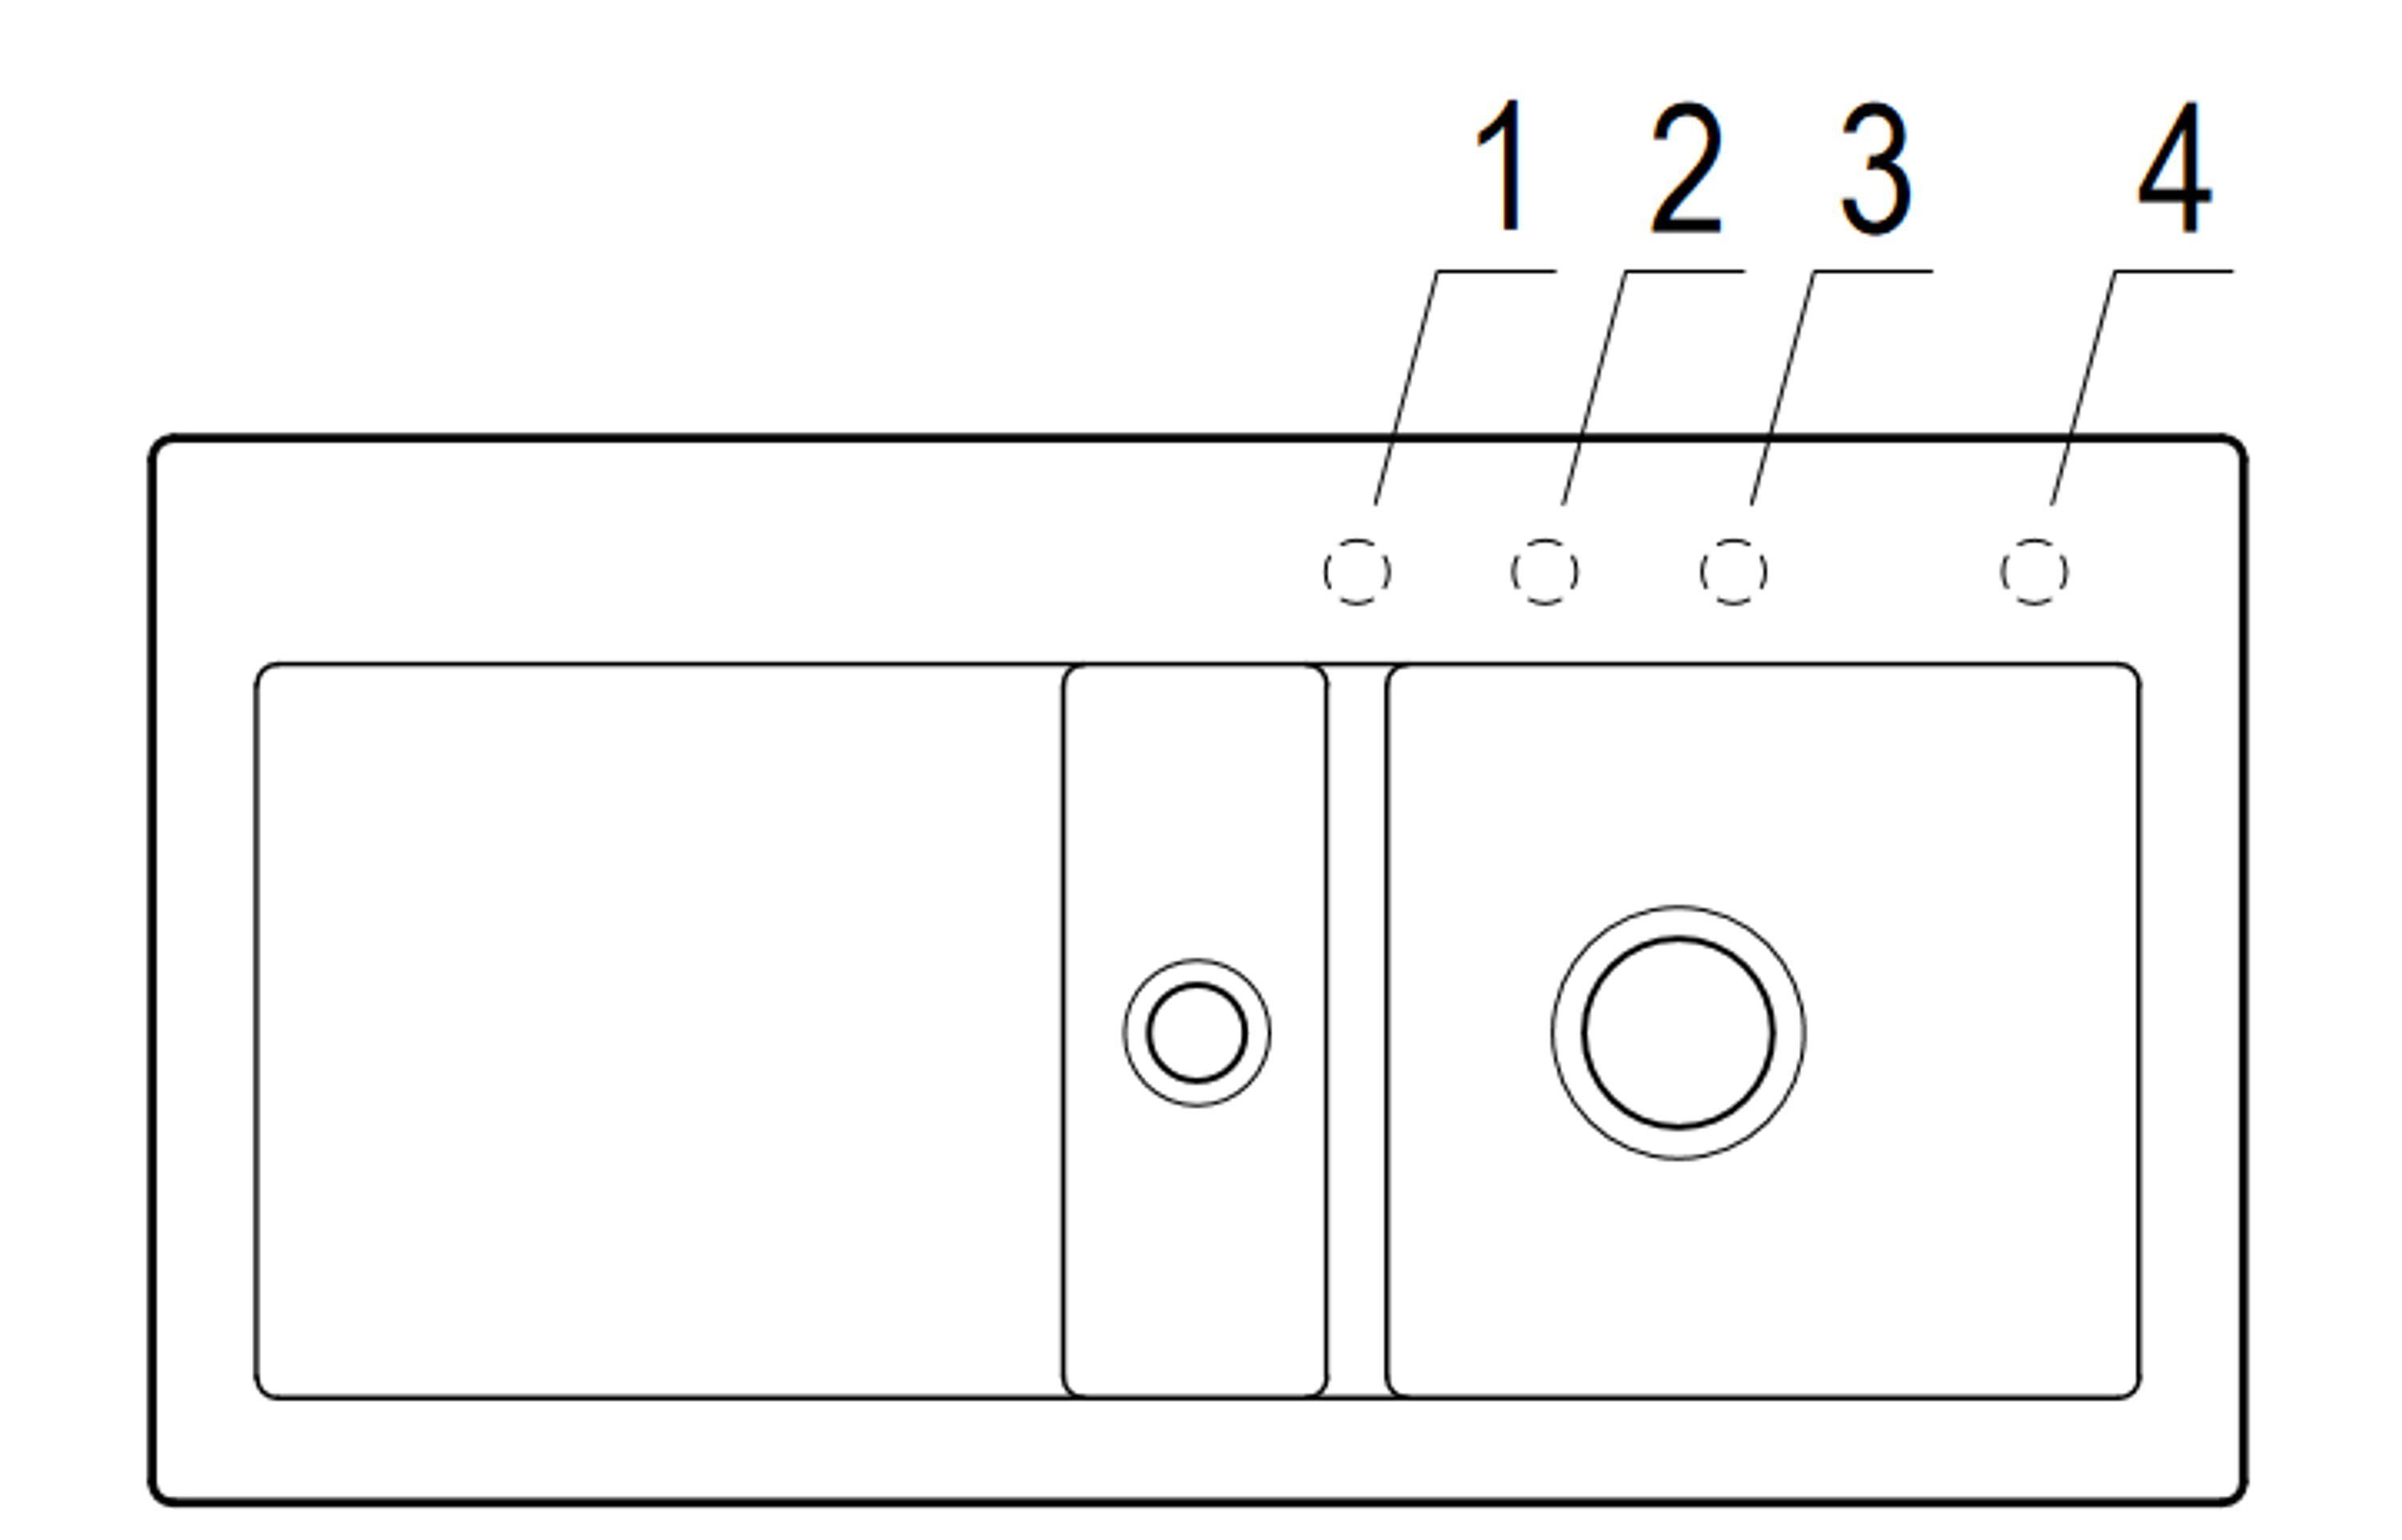 Villeroy & Boch 100/22 Geschmacksmuster rechts und cm, Becken Küchenspüle Rechteckig, geschützt, möglich 6712 i4, links 01